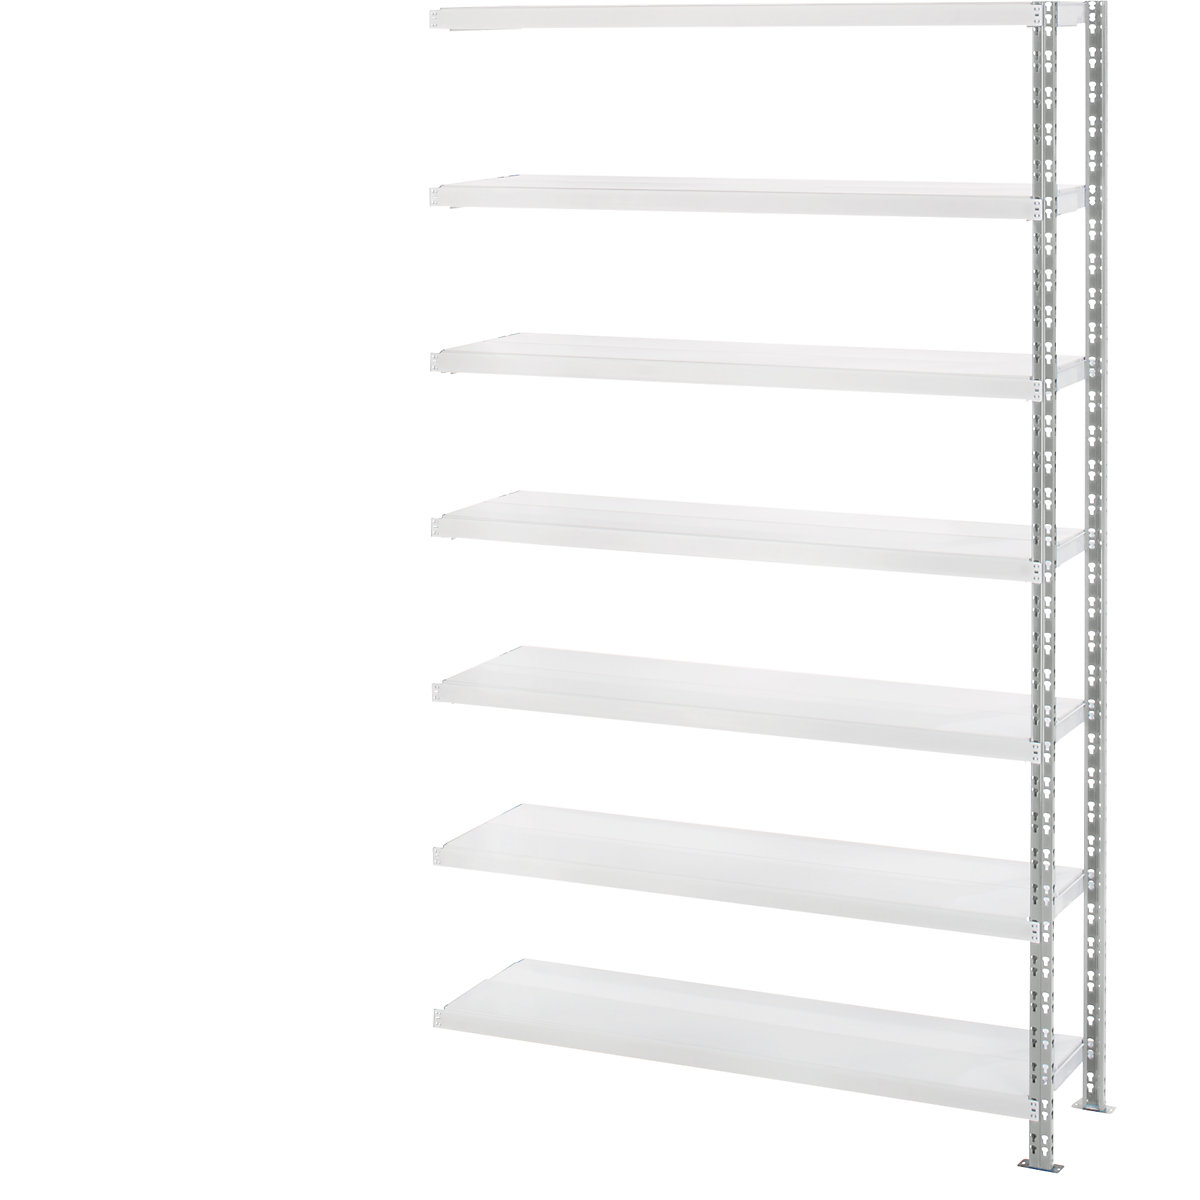 Wide span shelf unit with sheet steel shelves, depth 500 mm, extension shelf unit, HxW 2522 x 1525 mm